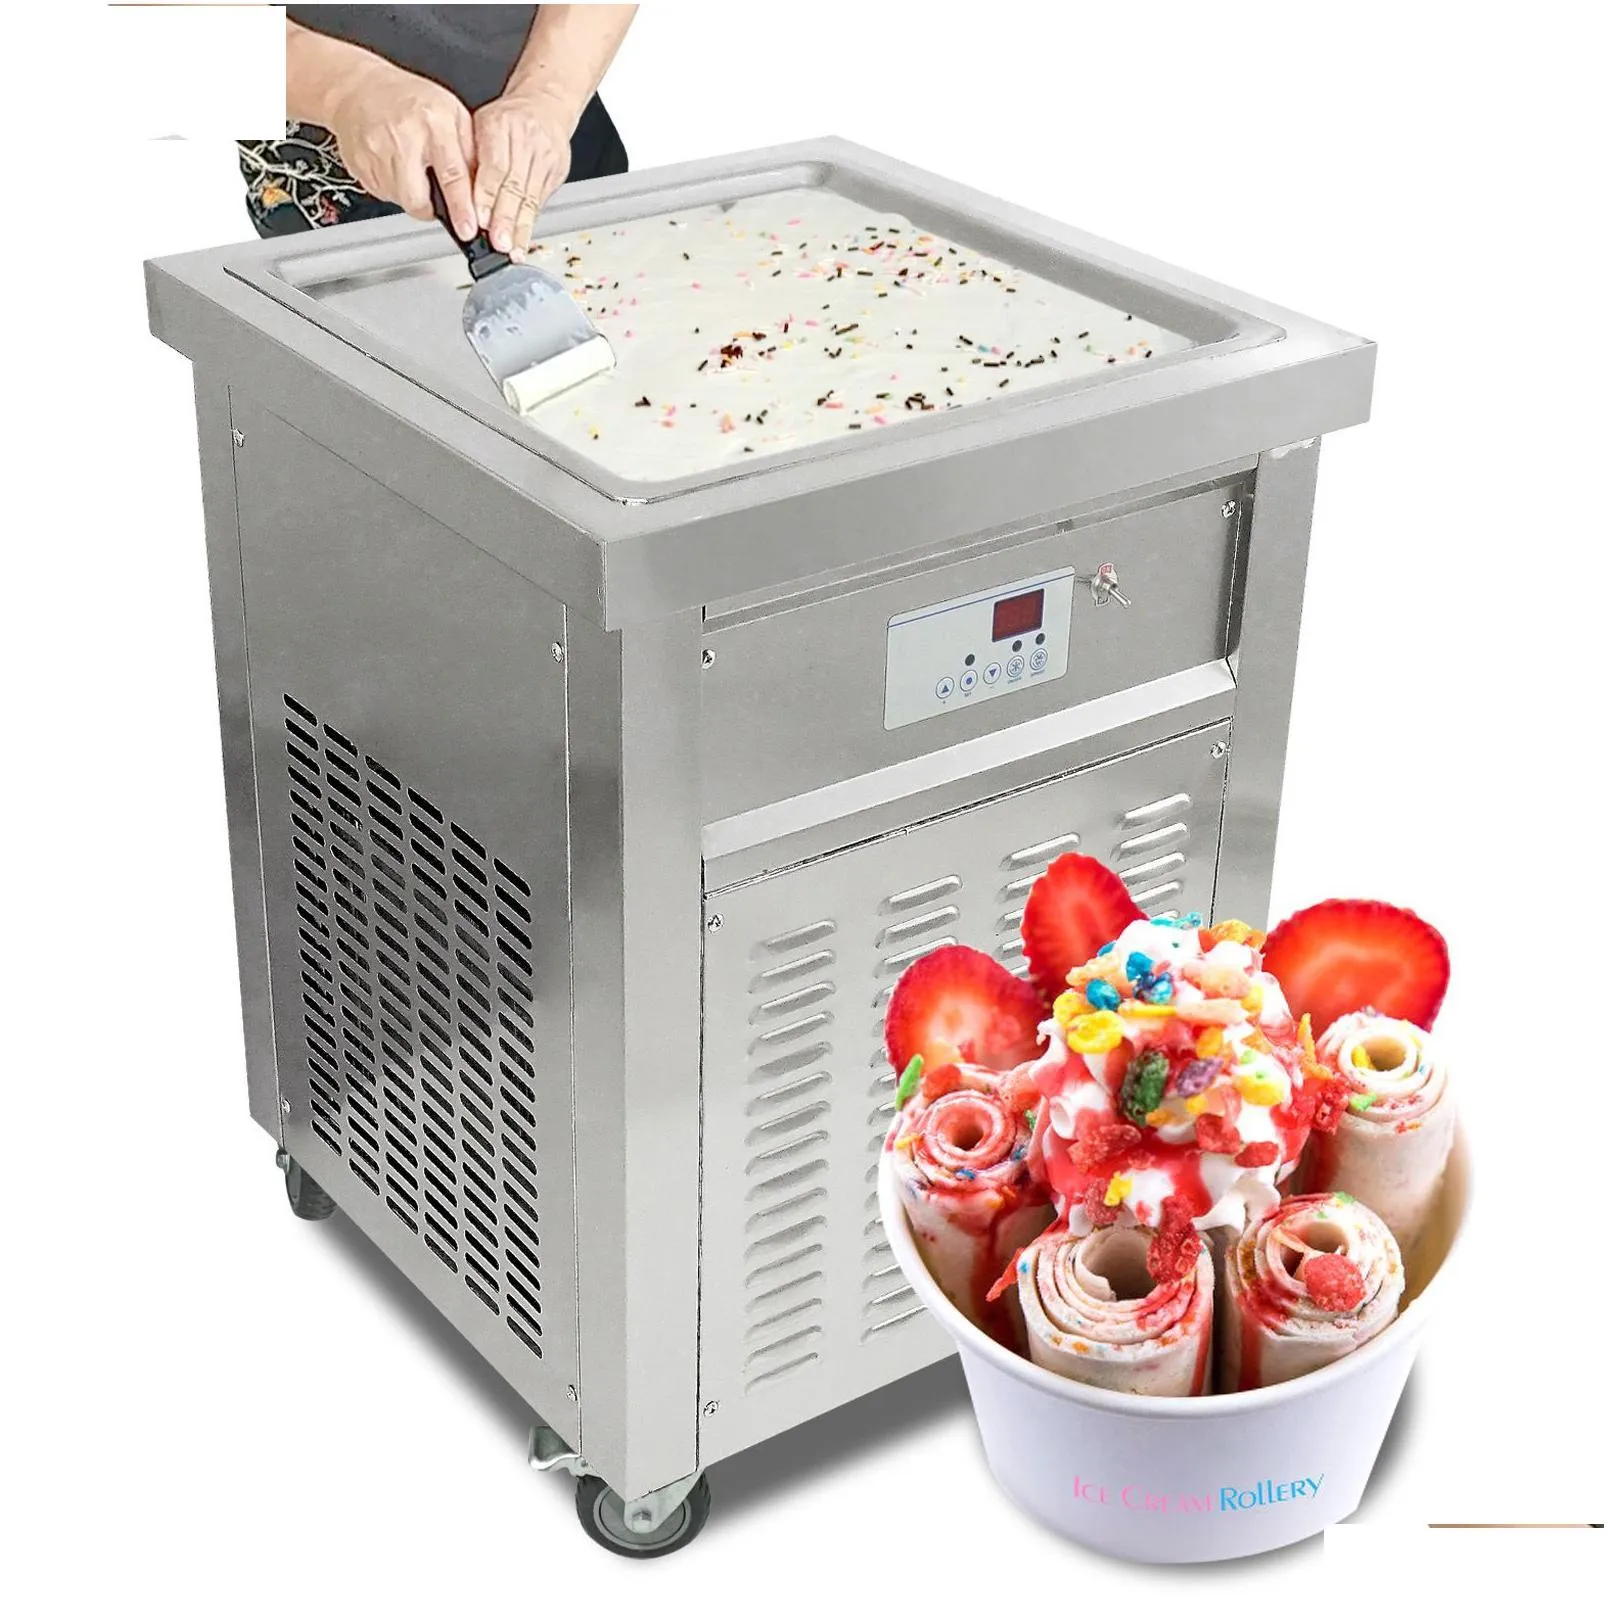 Food Processing Equipment Wholesale To Door Etl Ce Shipment Food Processing Equipment 52X52Cm Square Pan Roll Ice Cream Hine Drop Deli Dh4Yp